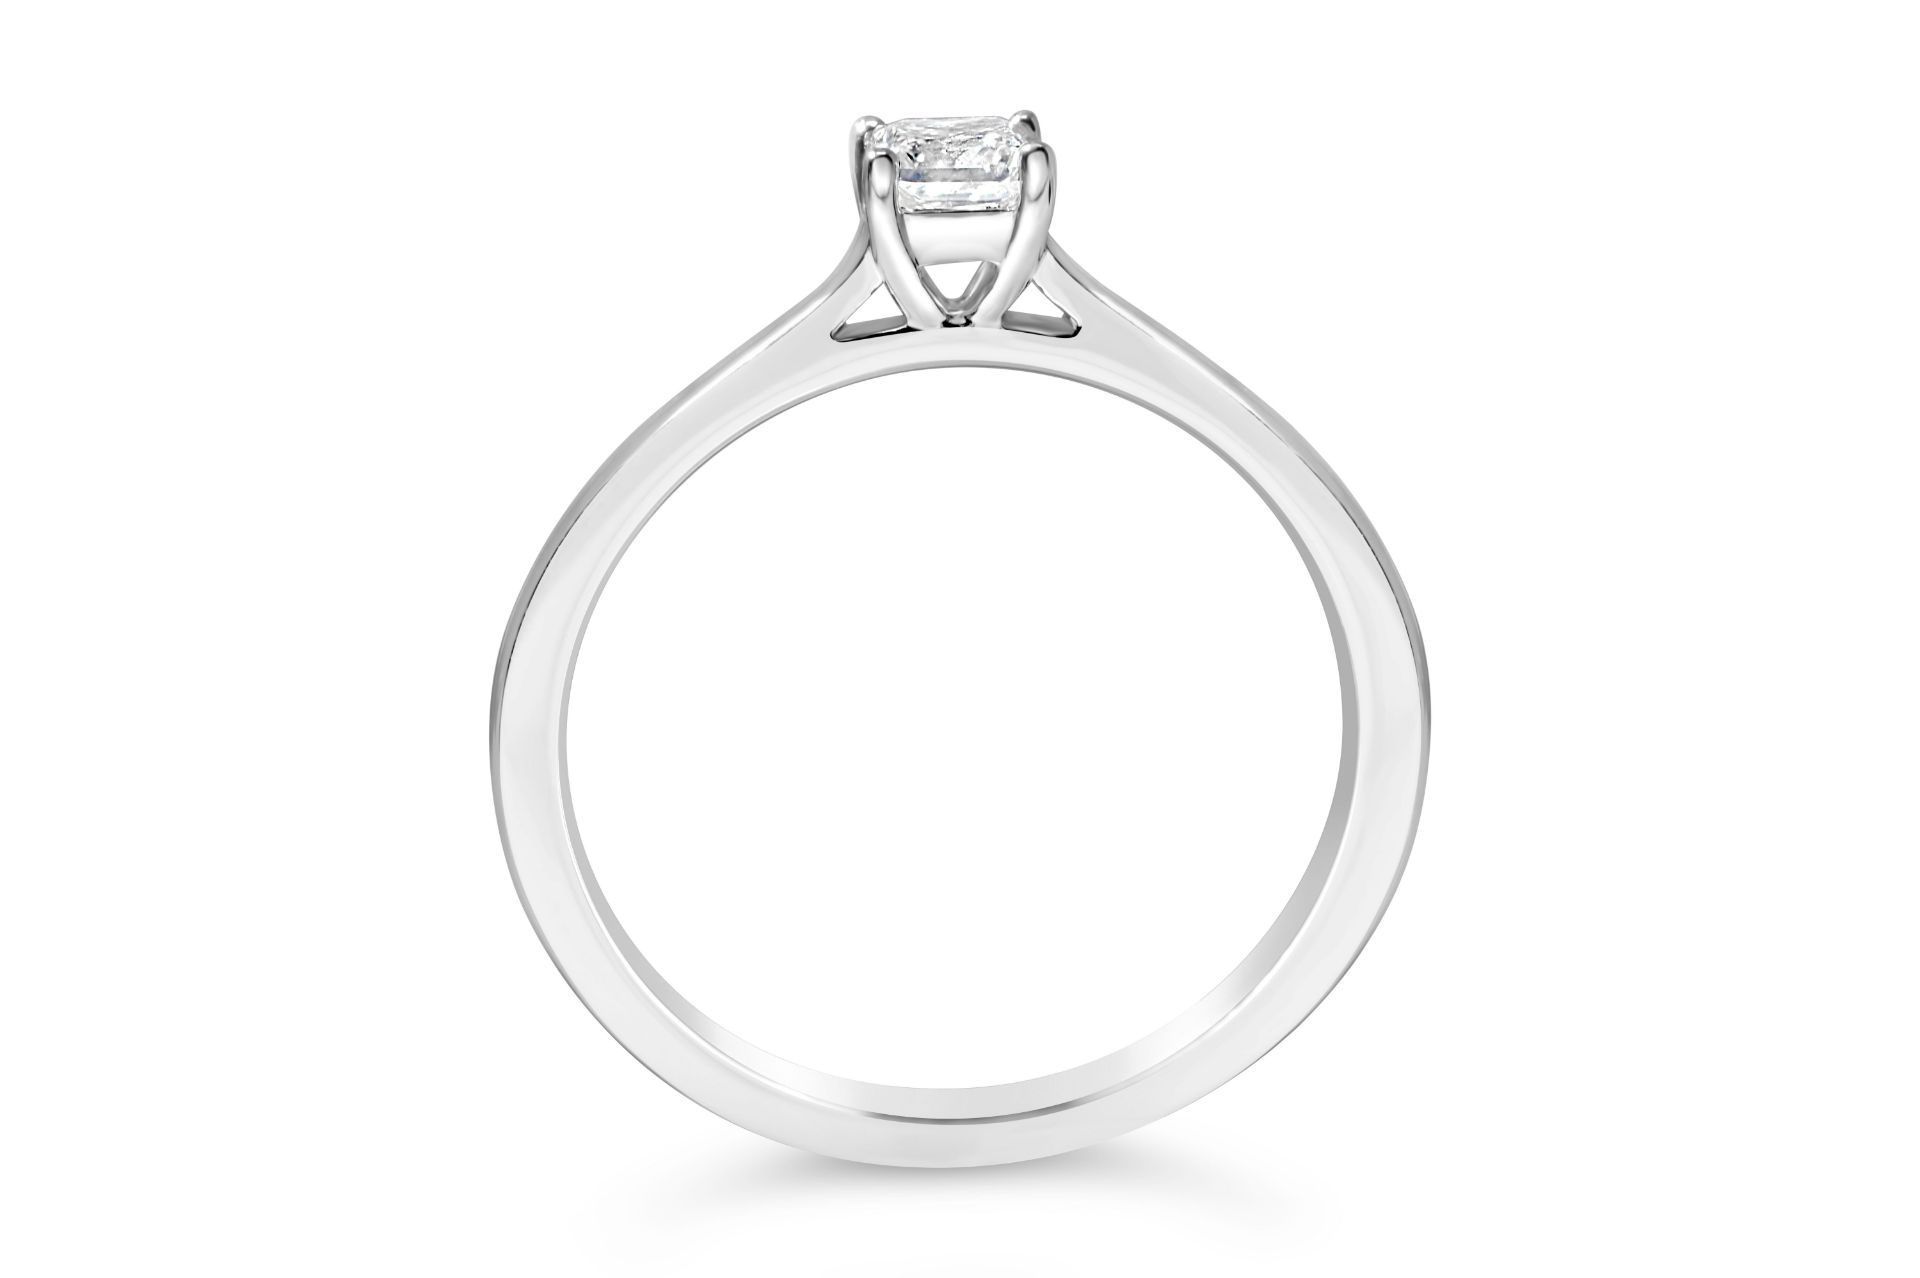 Premium Quality Princess Cut Solitaire Diamond Ring, Metal 9ct White Gold, Weight 2.15, Diamond - Image 2 of 2